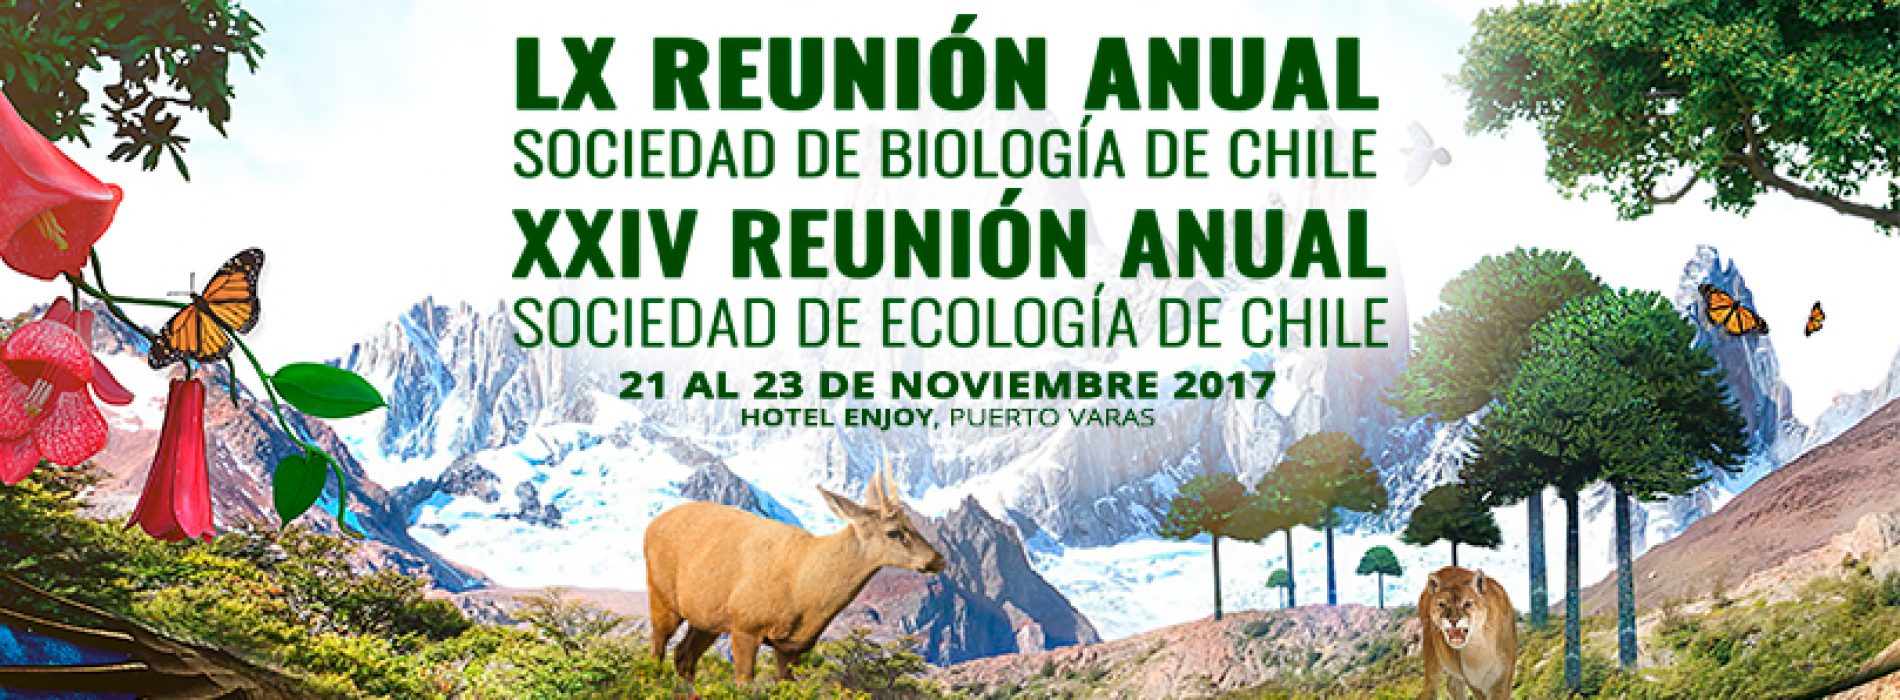 LX REUNION ANUAL SOCIEDAD DE BIOLOGIA DE CHILE -XXIV REUNION ANUAL SOCIEDAD DE ECOLOGIA DE CILE